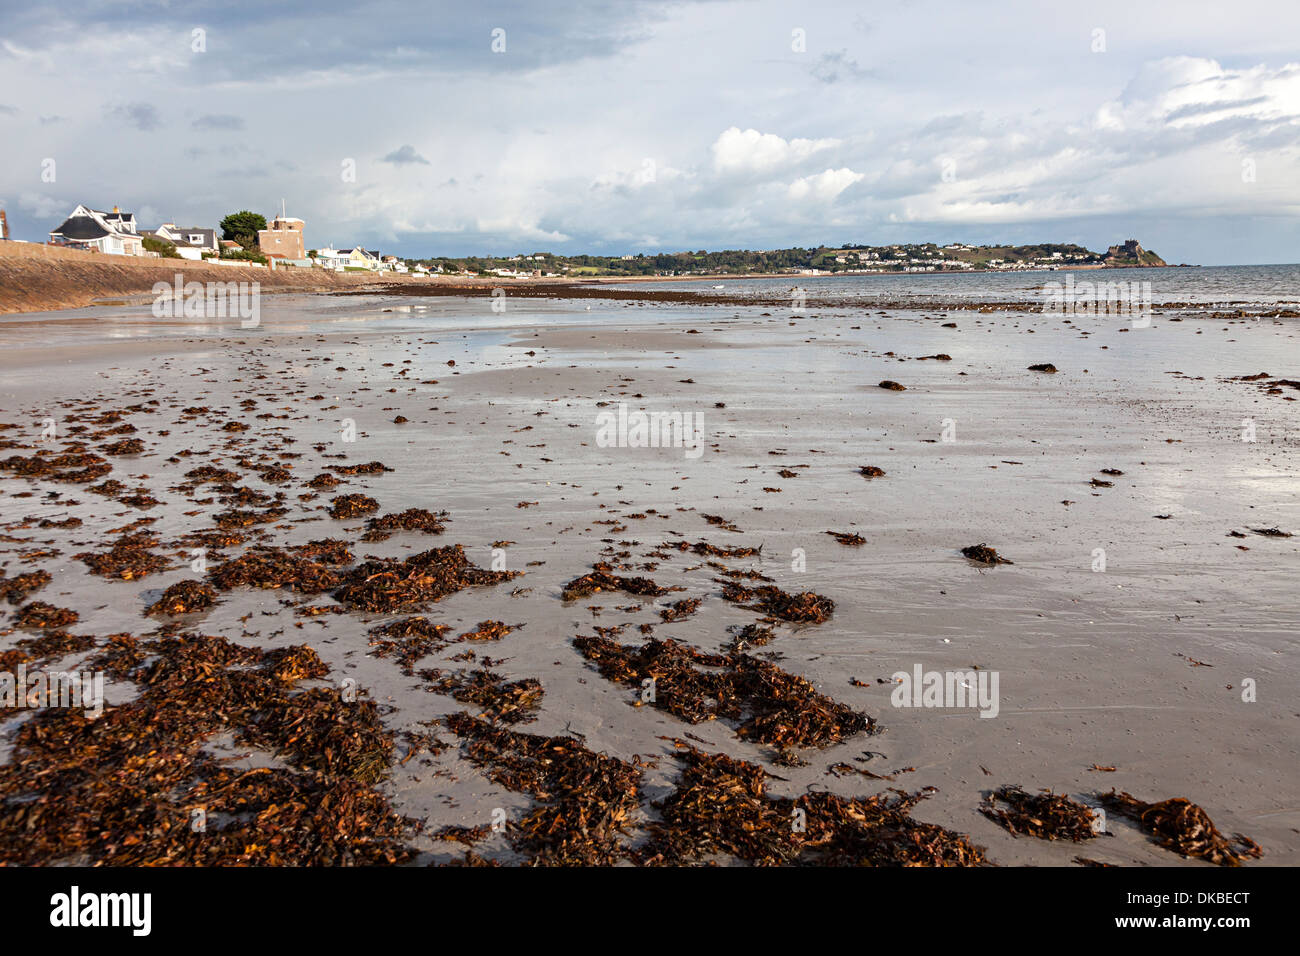 Beach and coastline, La Rocque, Jersey, Channel Islands, UK Stock Photo